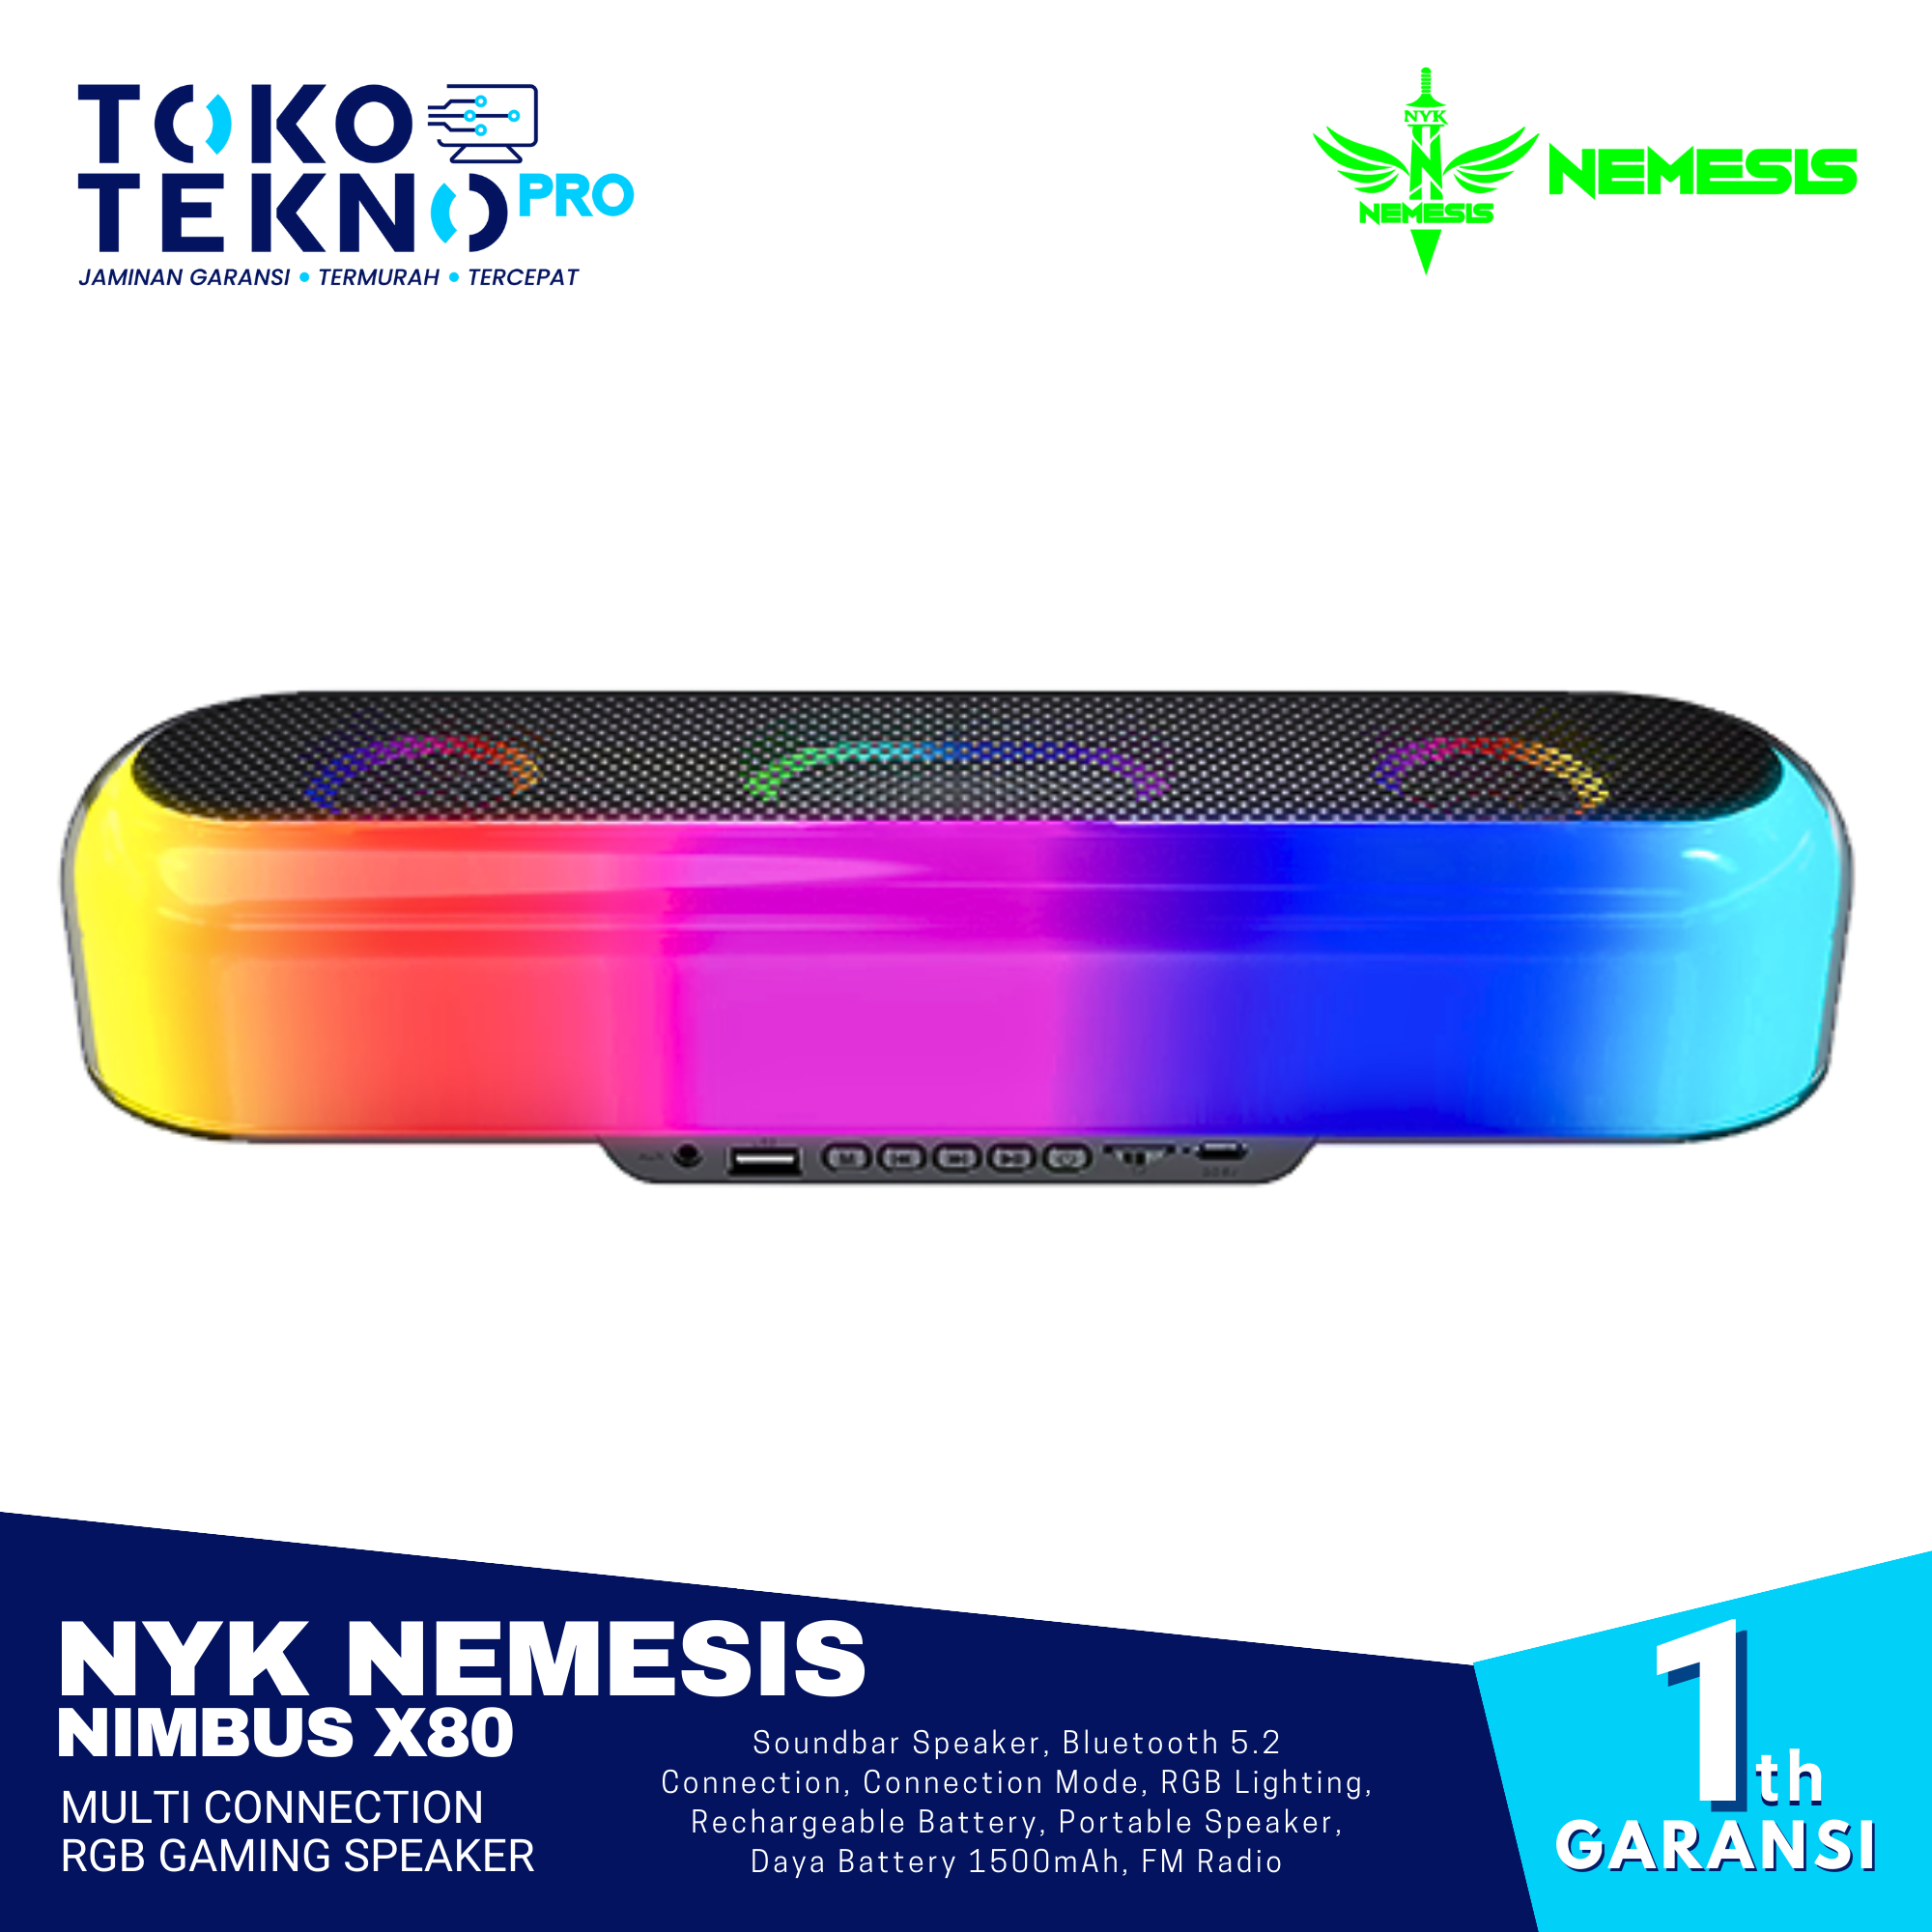 NYK Nemesis Nimbus X80 Multi Connection RGB Gaming Speaker